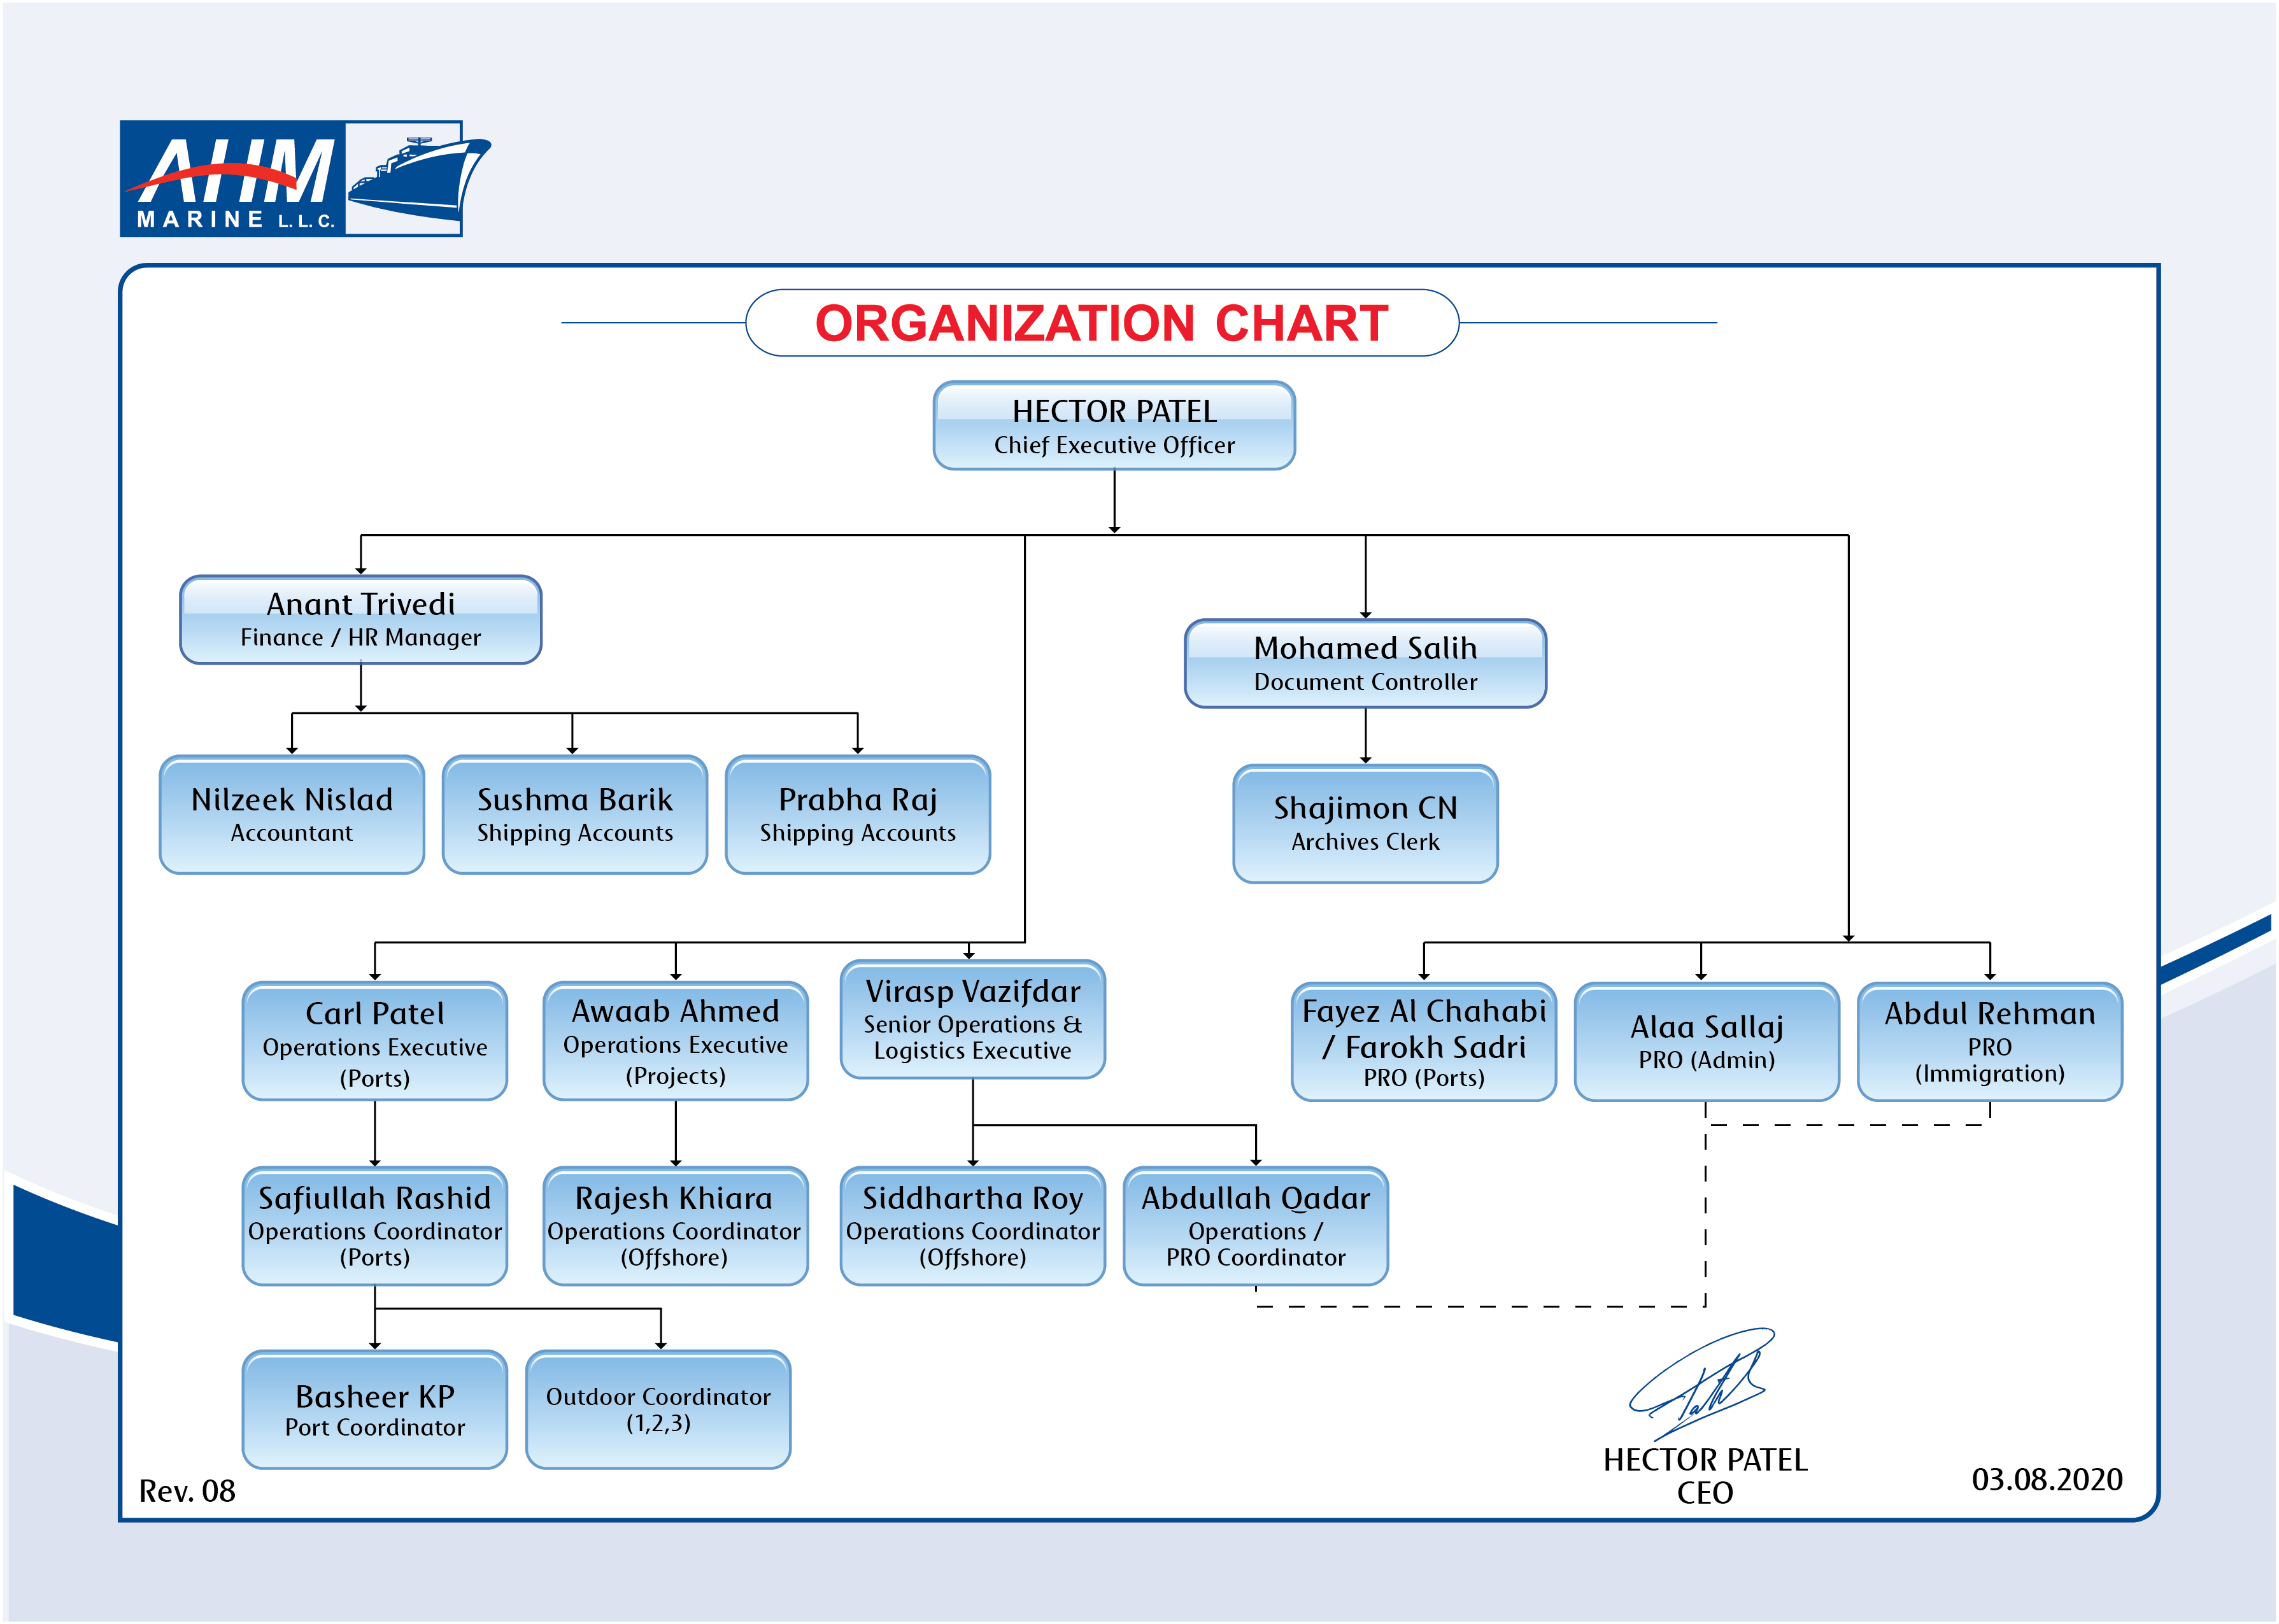 Executive Org Chart